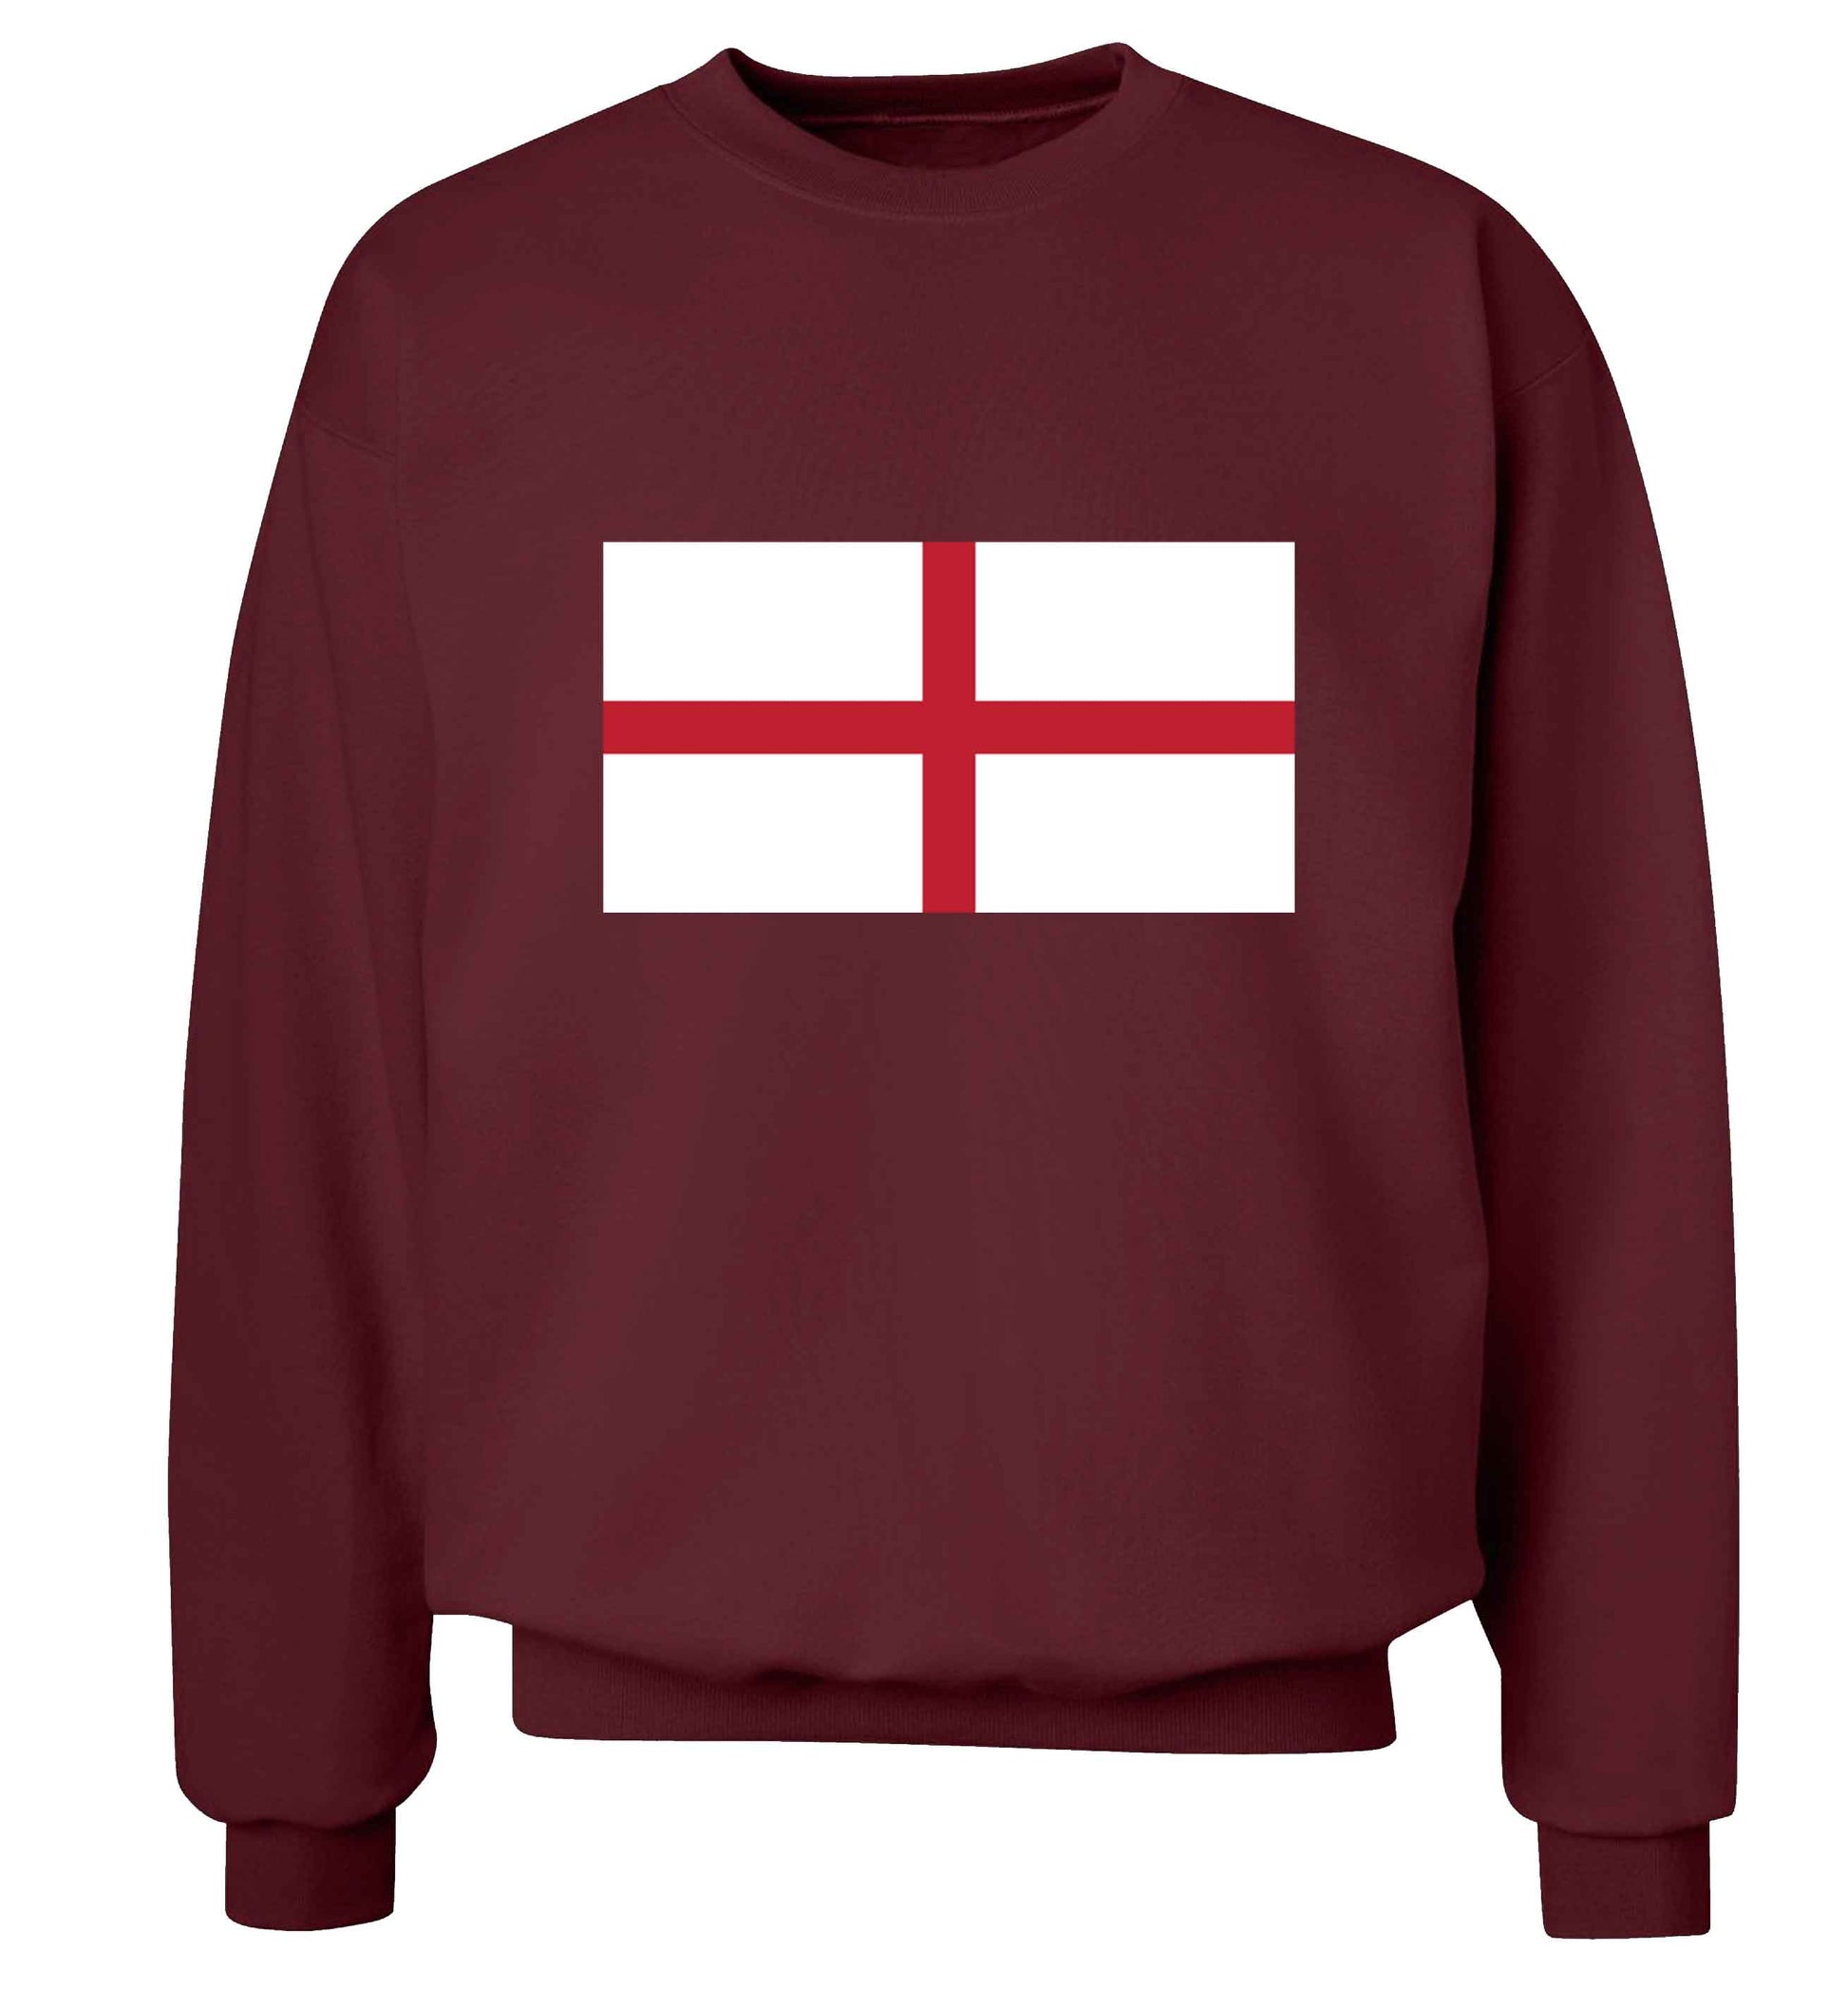 England Flag adult's unisex maroon sweater 2XL